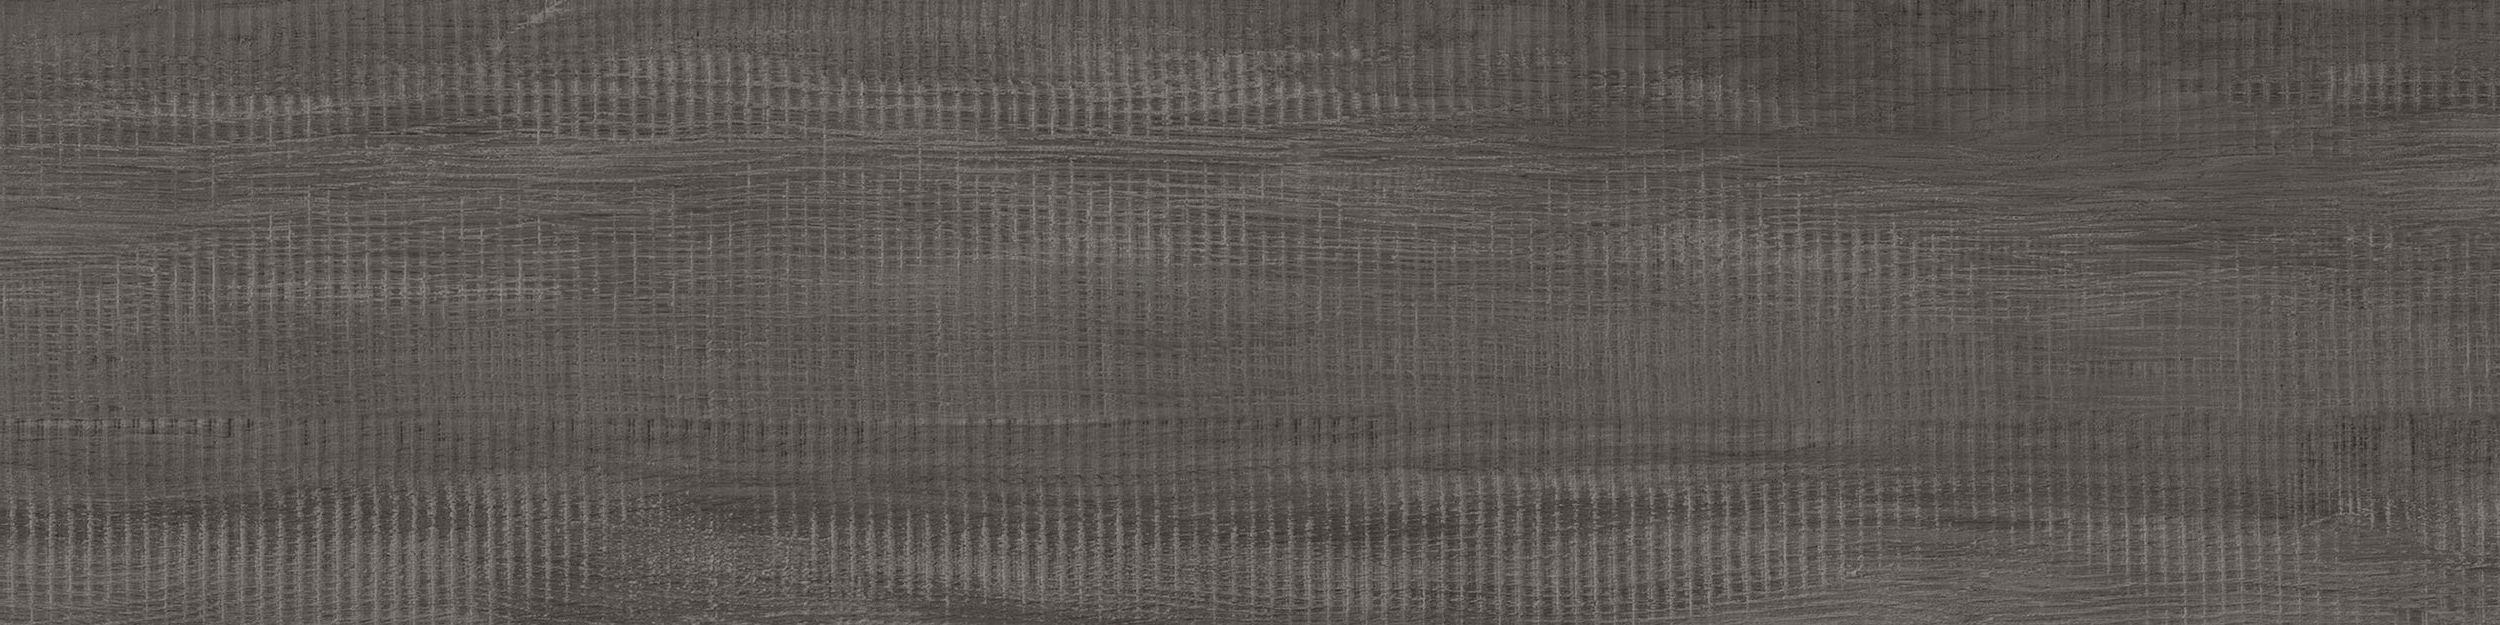 Textured Woodgrains LVT In Rustic Charcoal imagen número 1